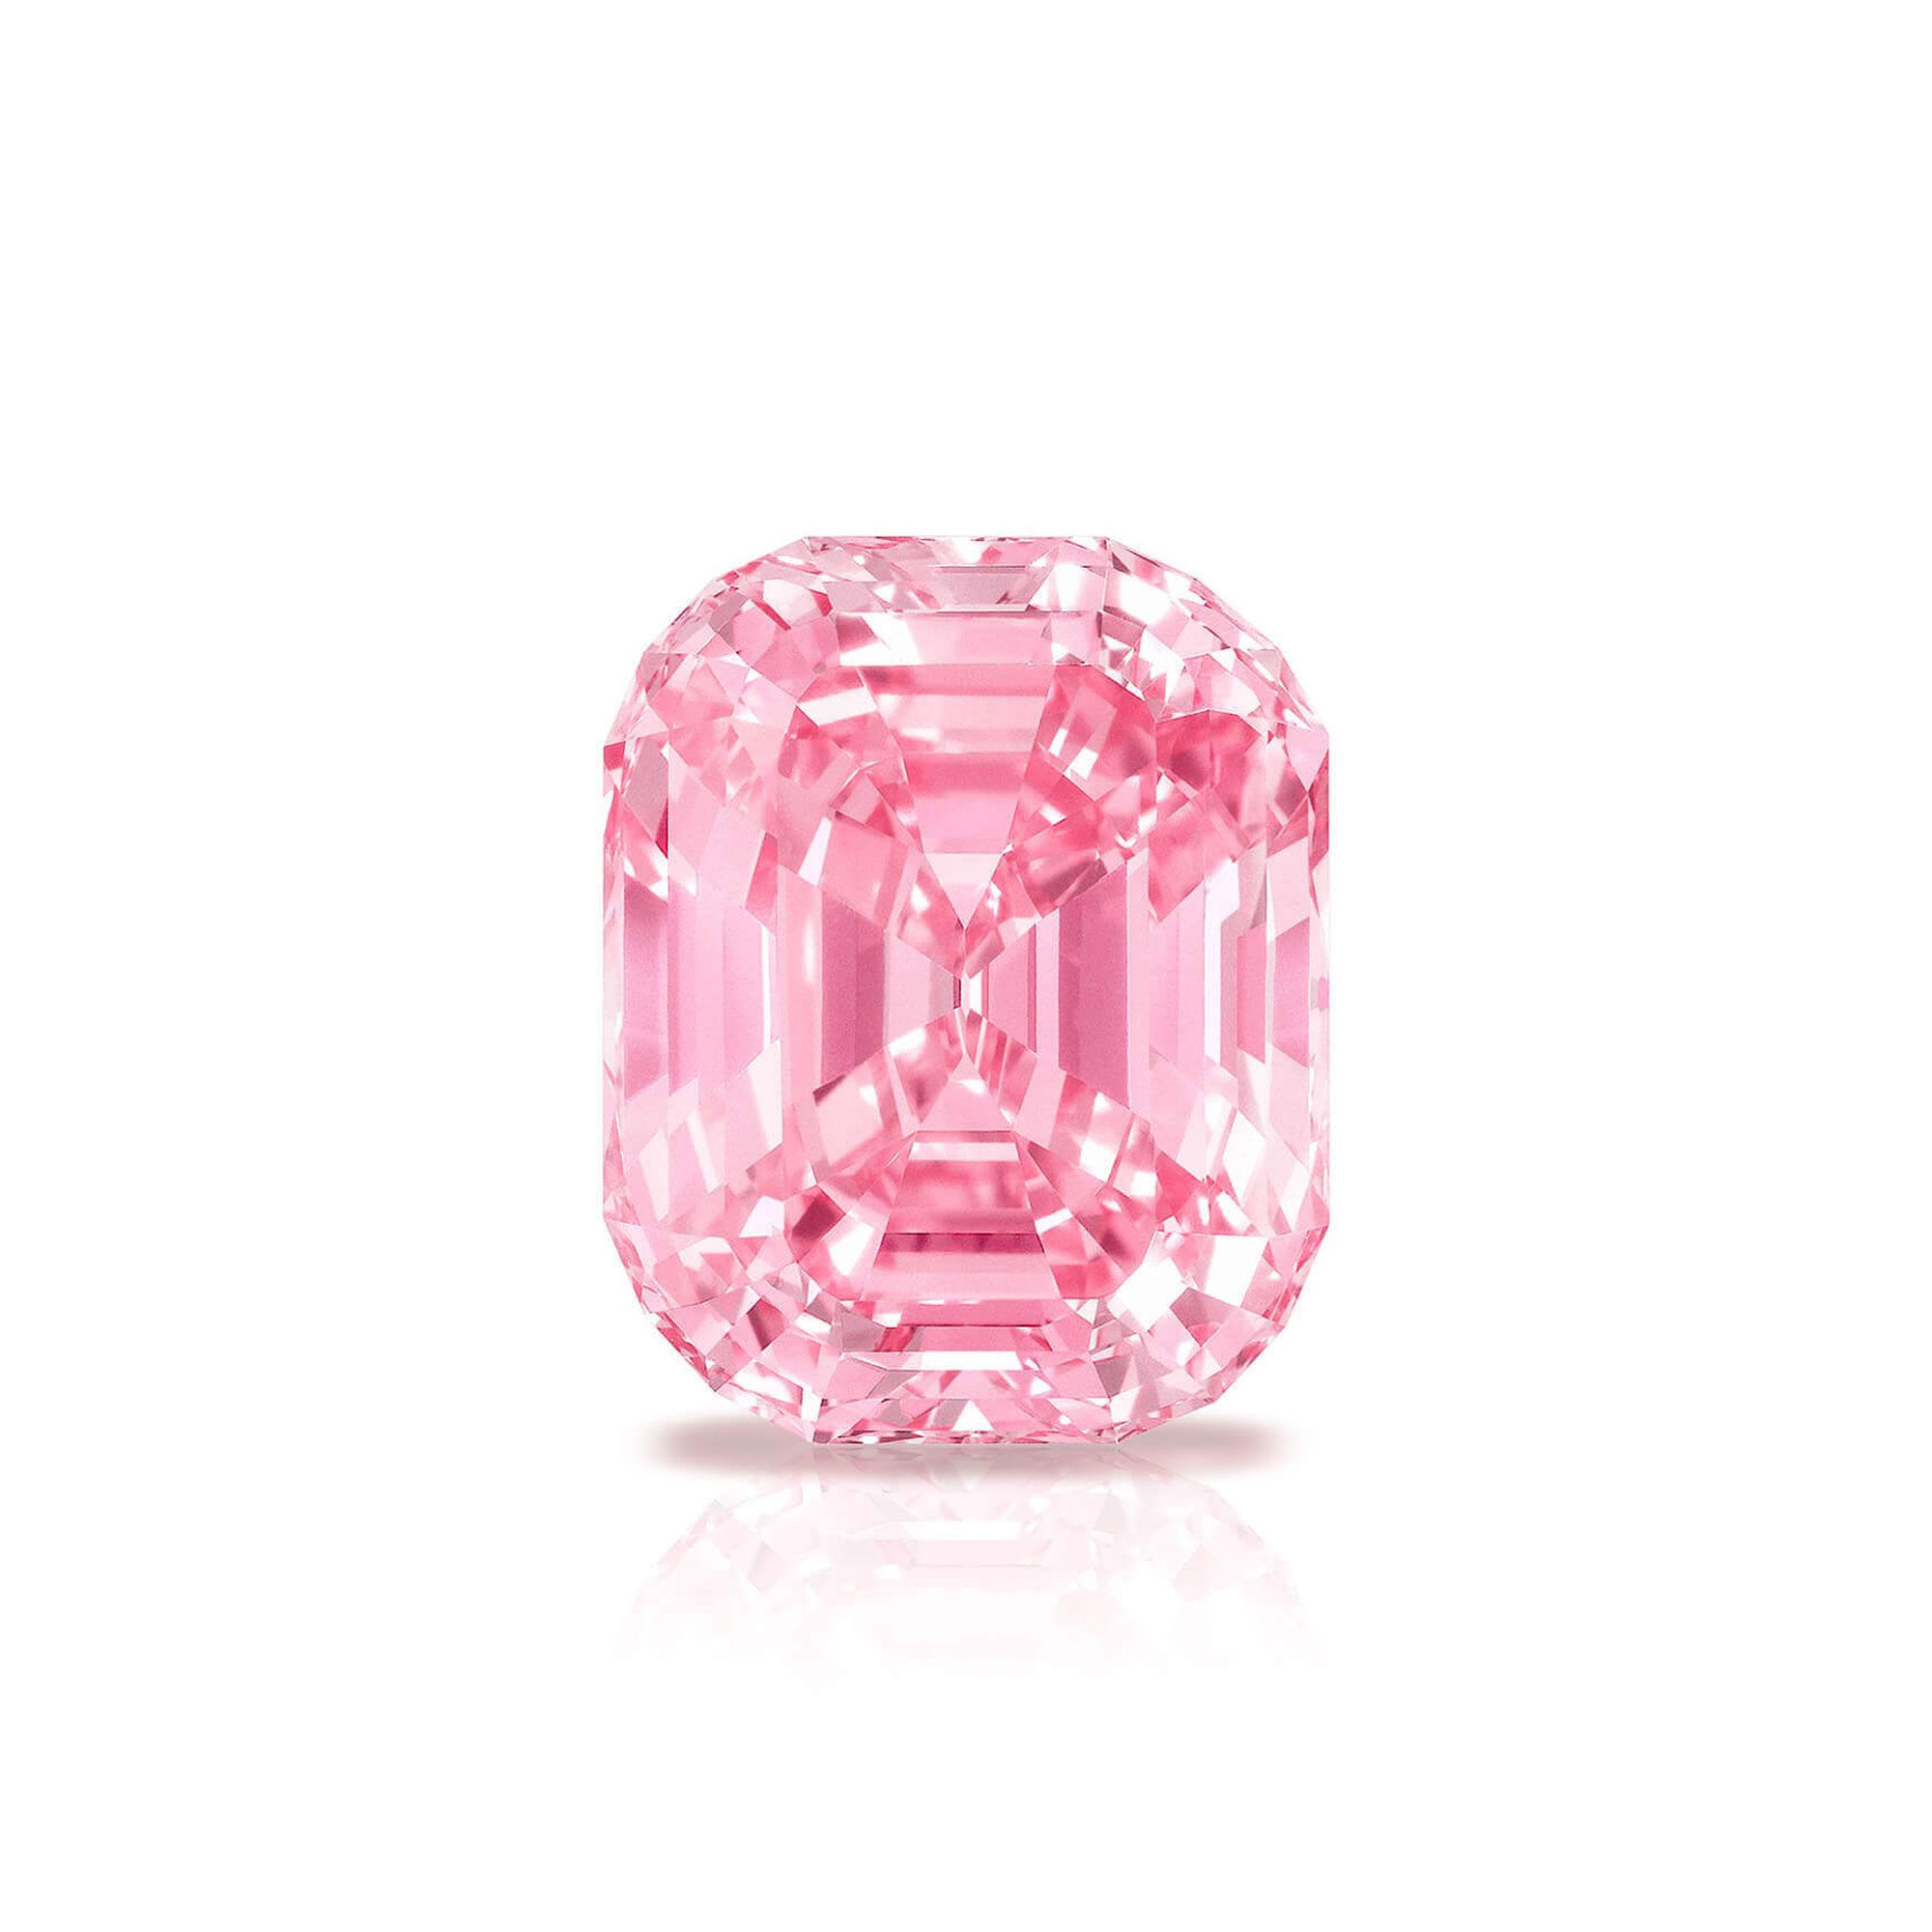 The Graff Pink famous pink diamond